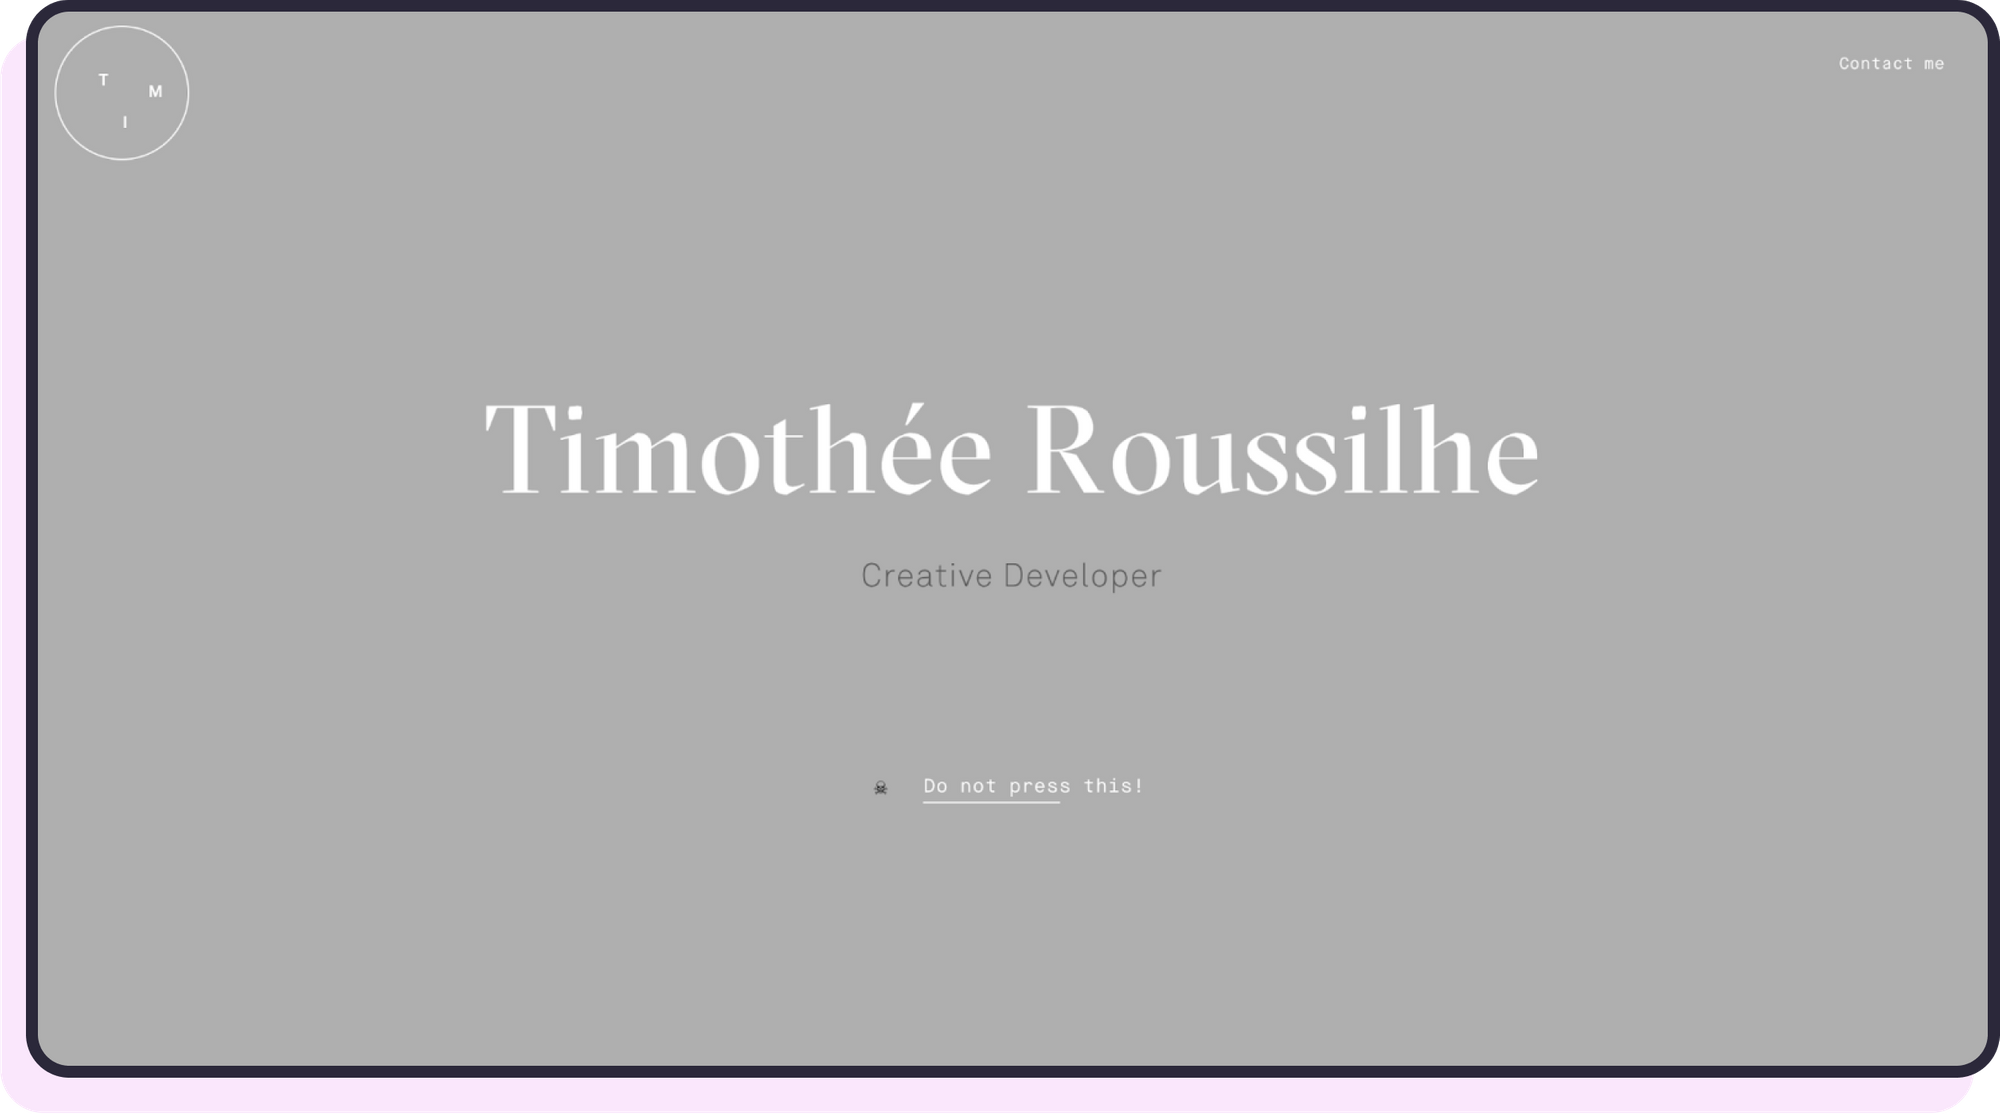 Timothèe's portfolio homepage